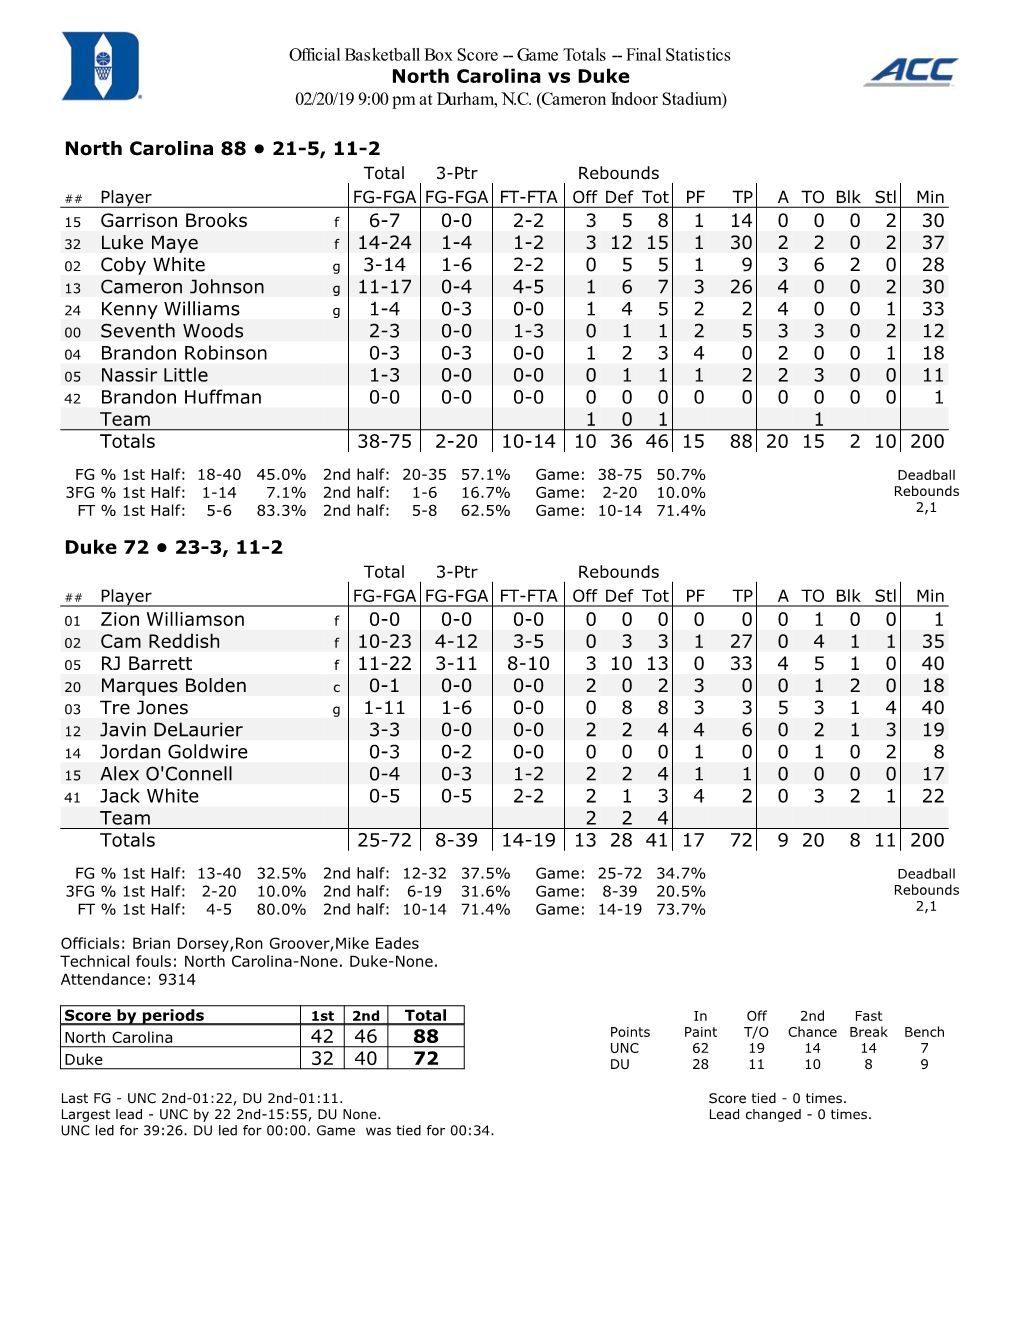 Official Basketball Box Score -- Game Totals -- Final Statistics North Carolina Vs Duke 02/20/19 9:00 Pm at Durham, N.C. (Cameron Indoor Stadium)